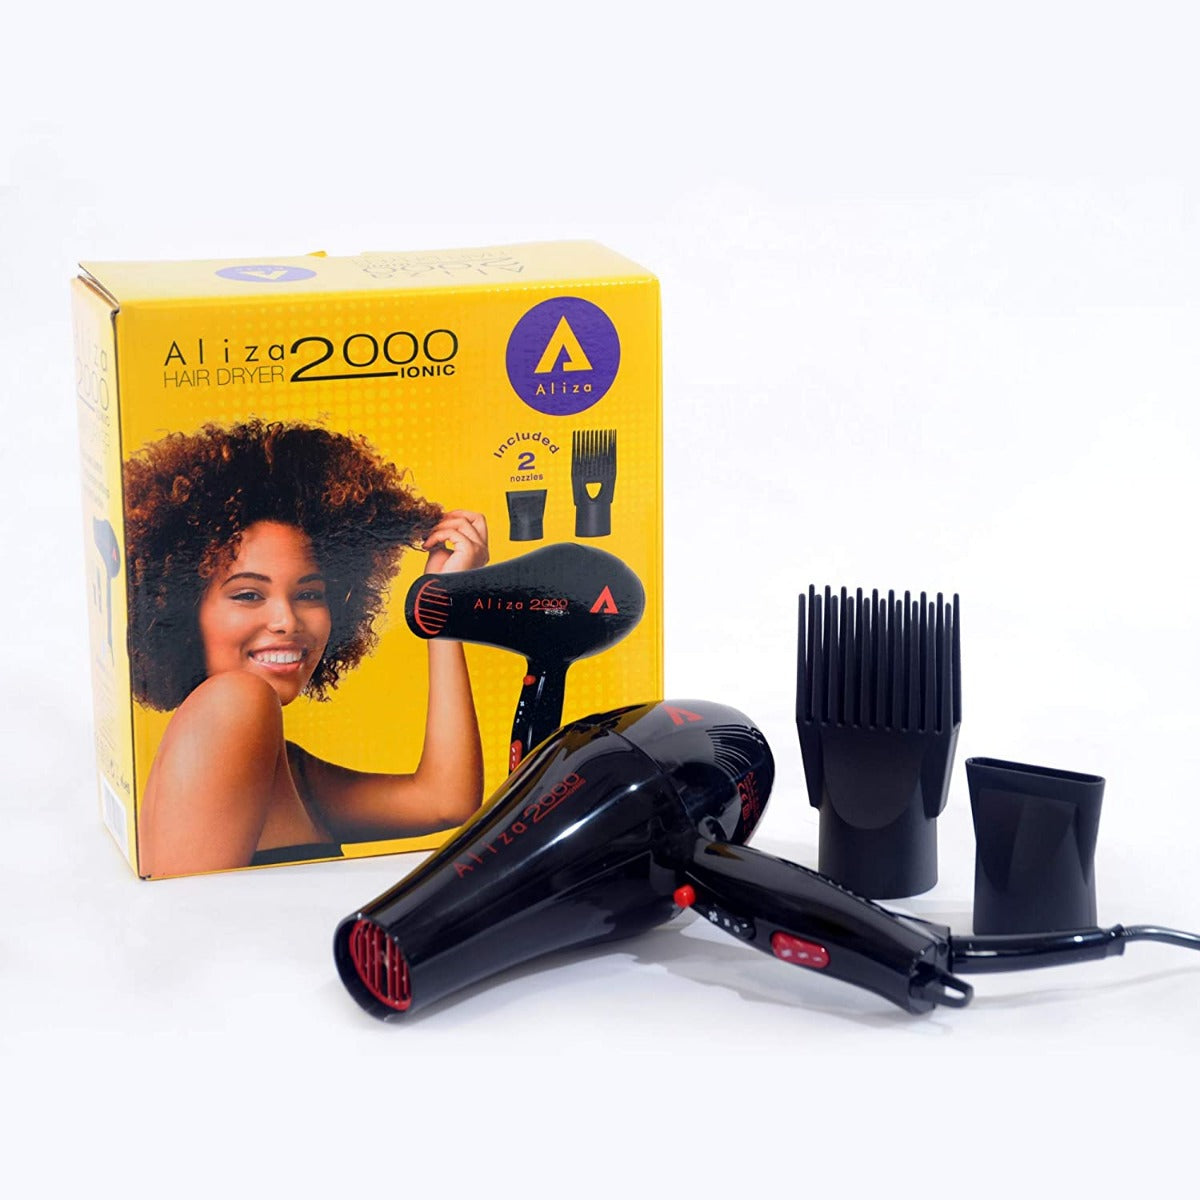 Aliza 2000 Ionic Hair Dryer